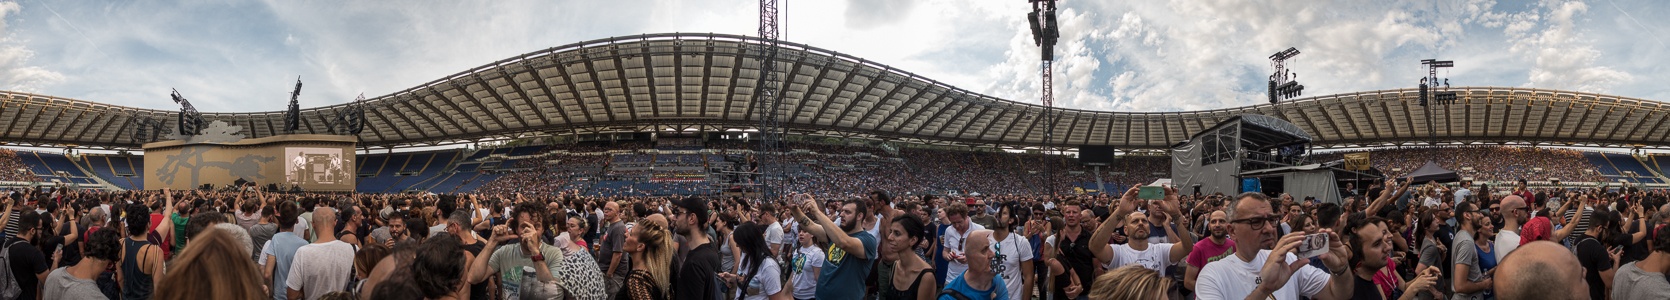 Stadio Olimpico (Olympiastadion): U2 (+ Noel Gallagher’s High Flying Birds) Rom Stadio Olimpico (Olympiastadion) Rom